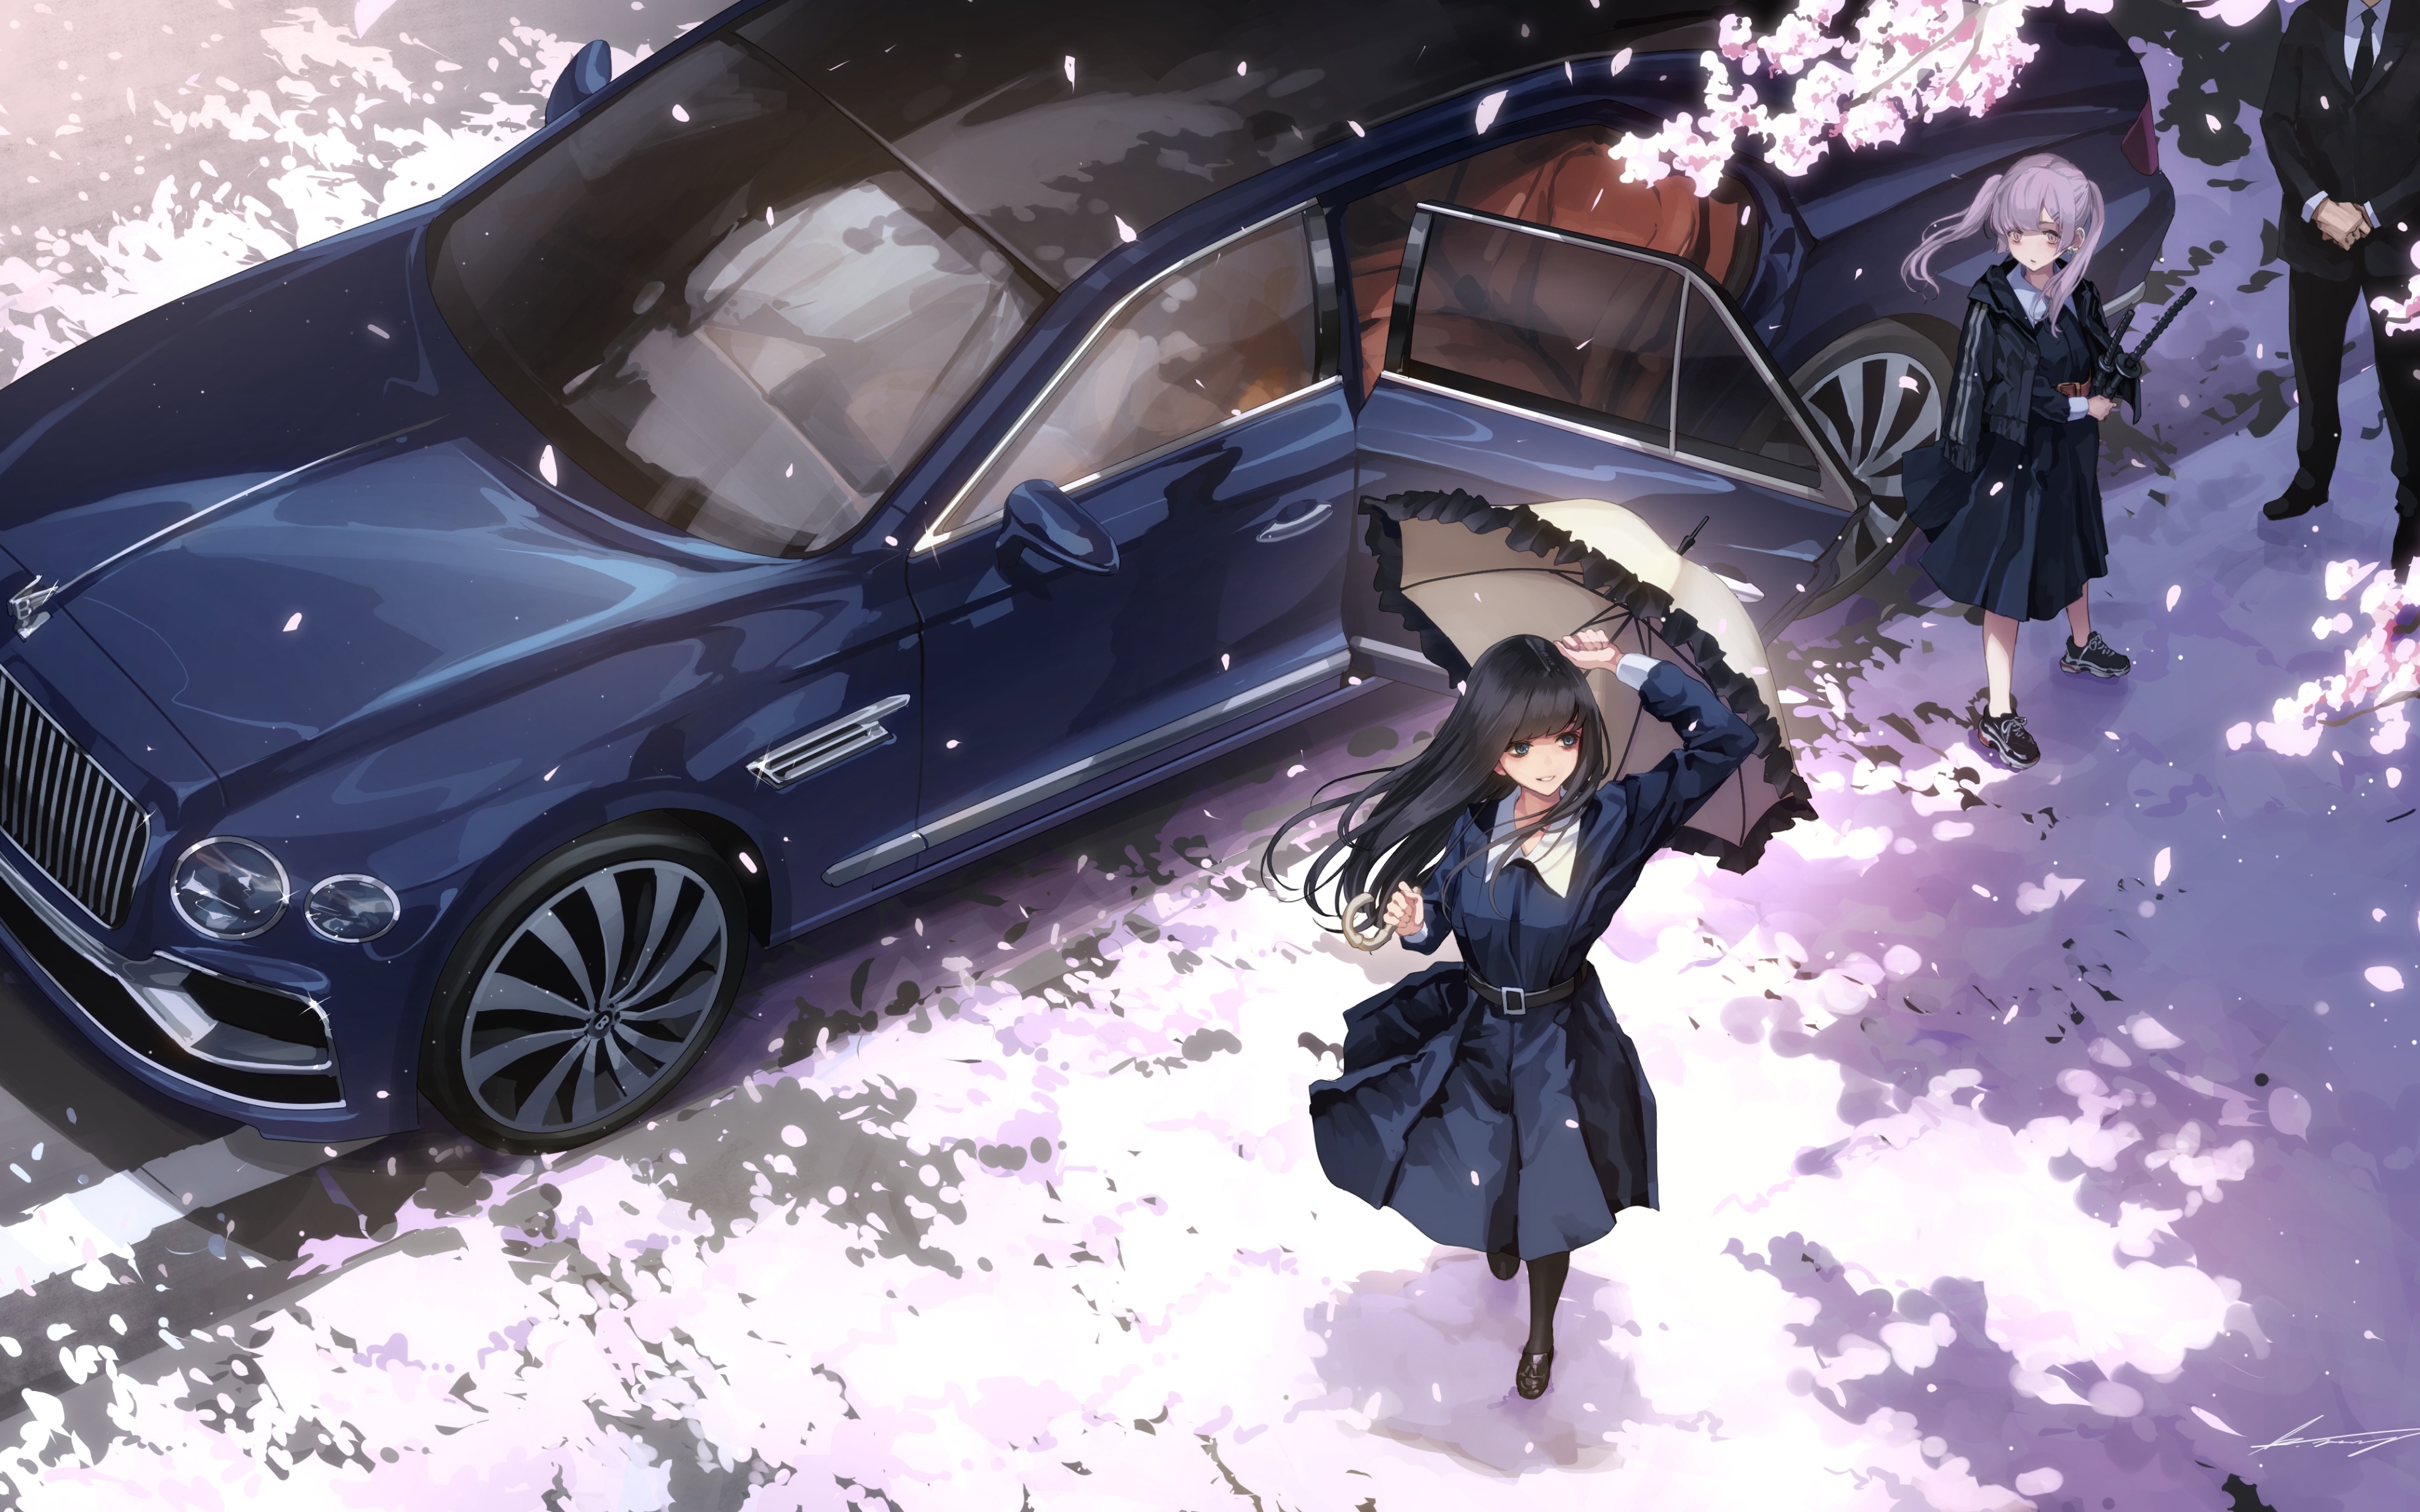 Wallpaper Anime Modern Princess, Luxury Car, Sakura Blossom, Dress, Katana, Bodyguards:4212x2512